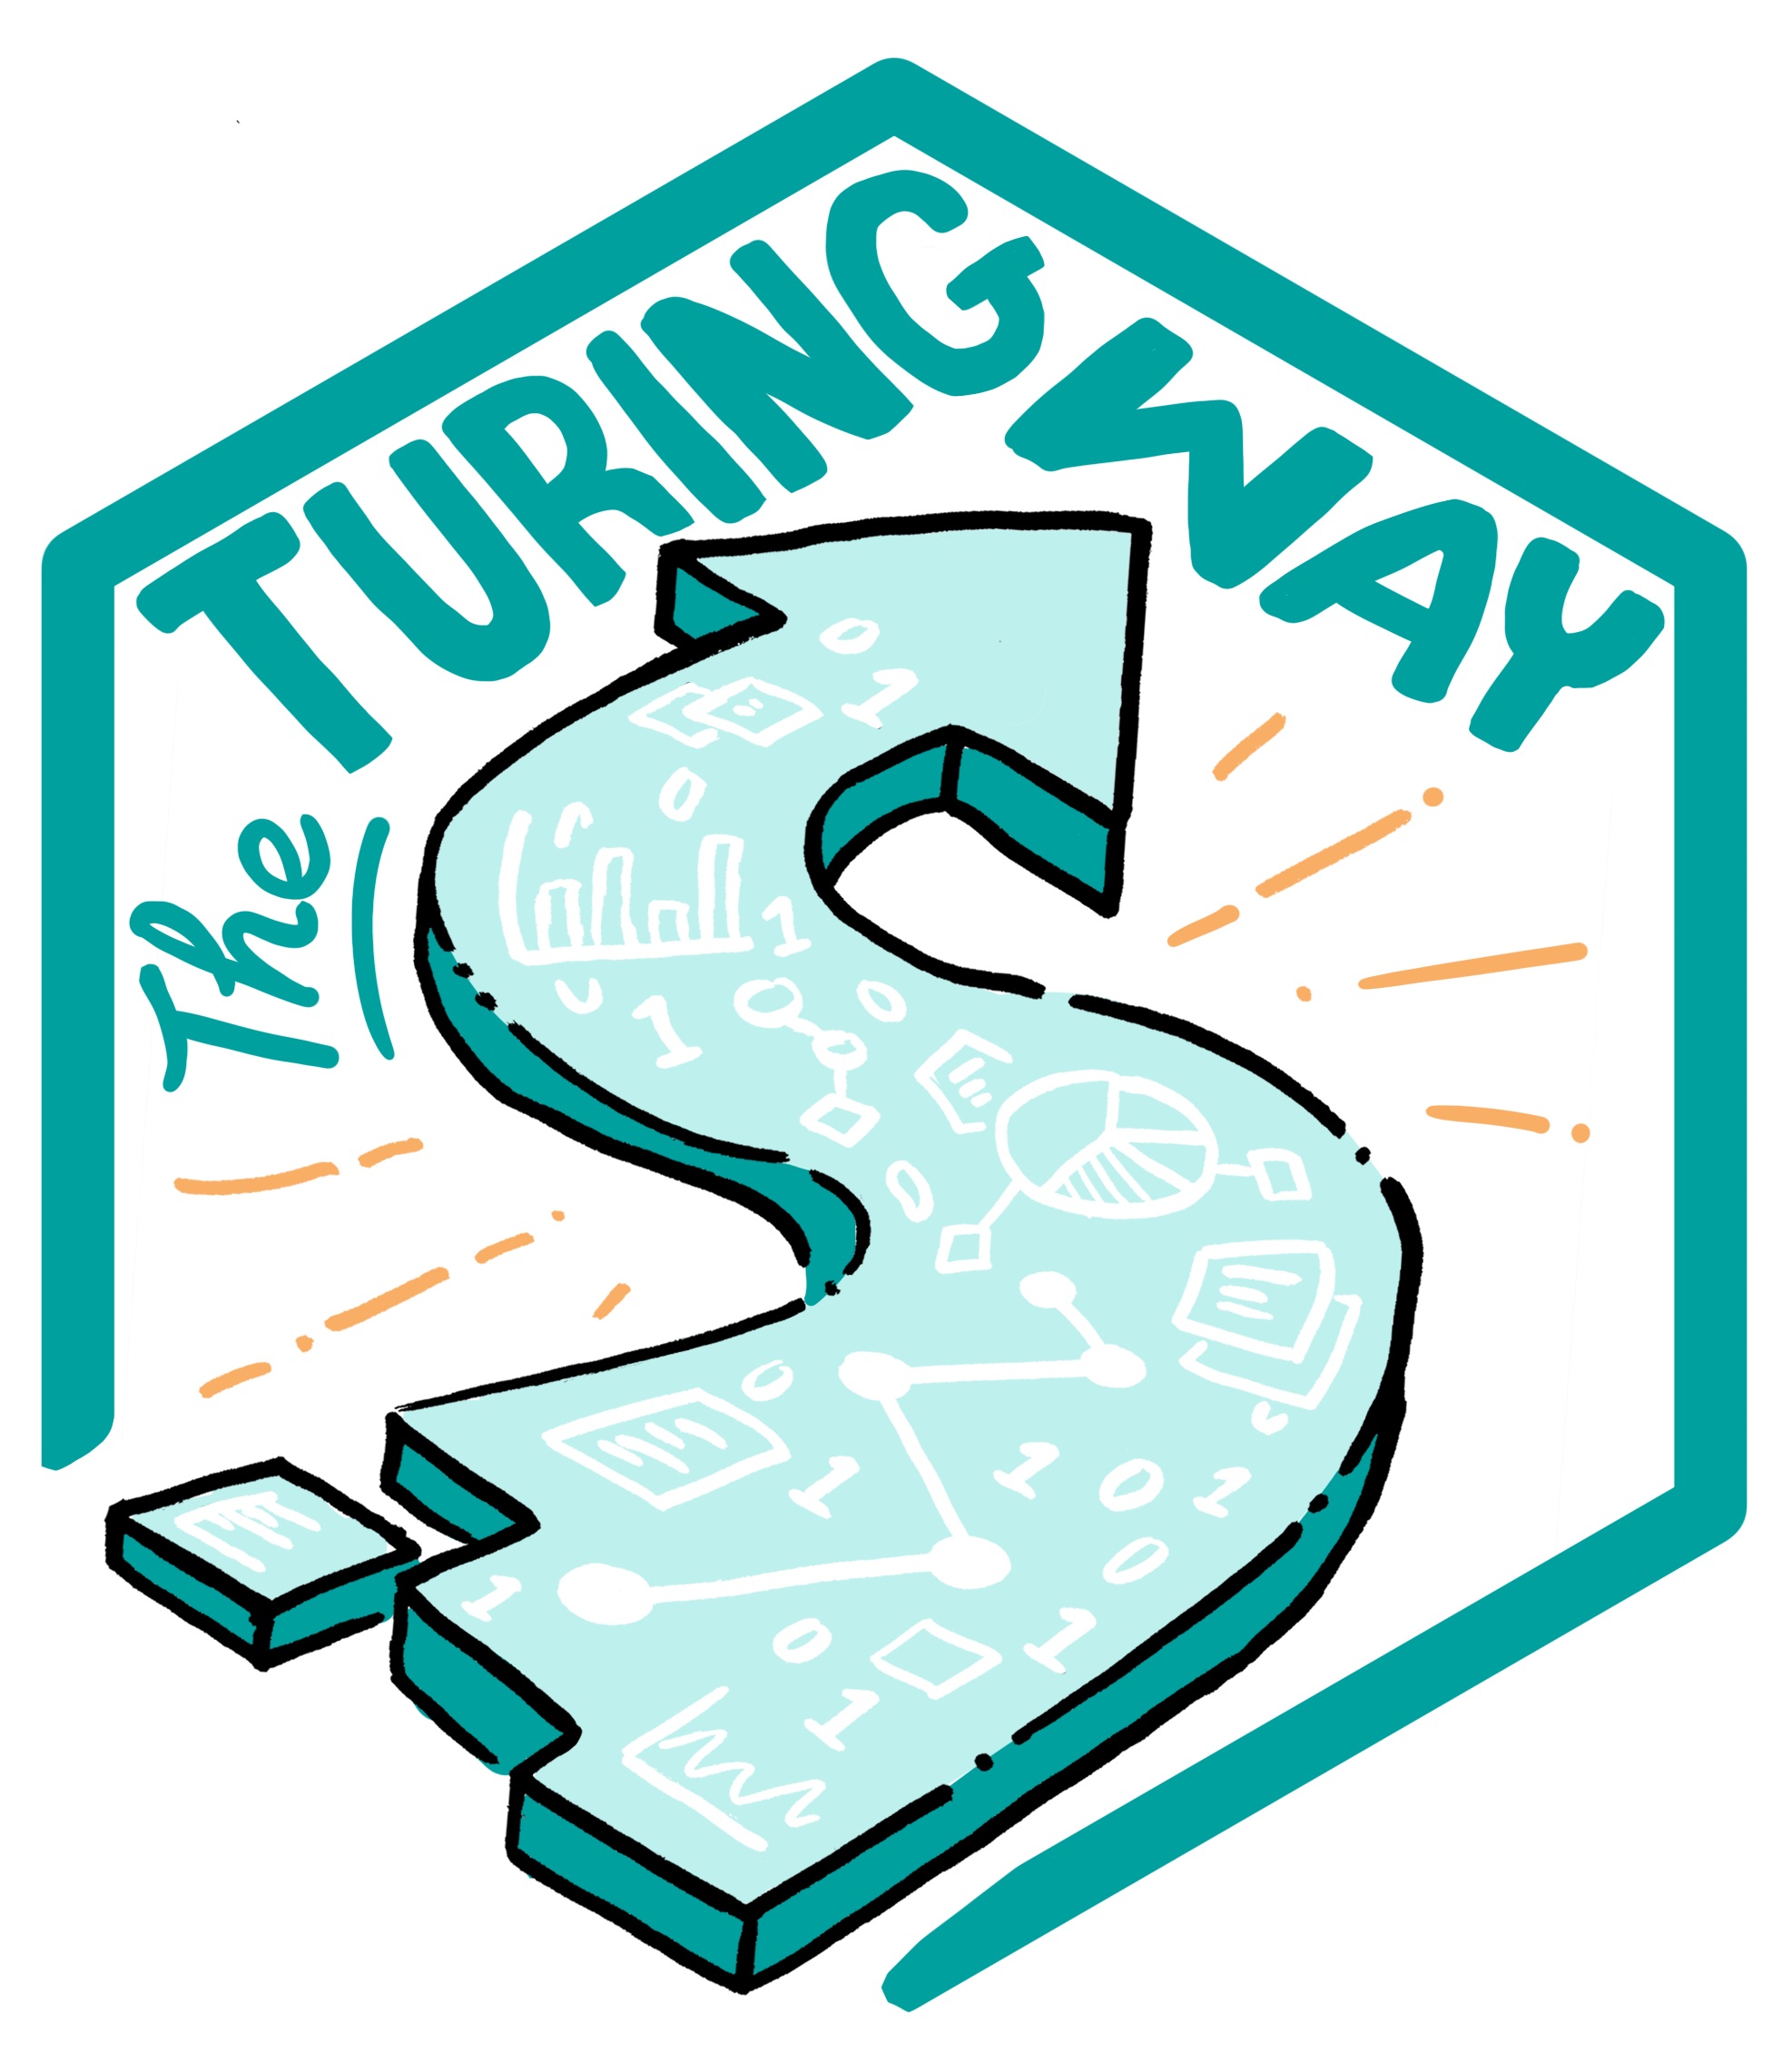 The Turing Way logo